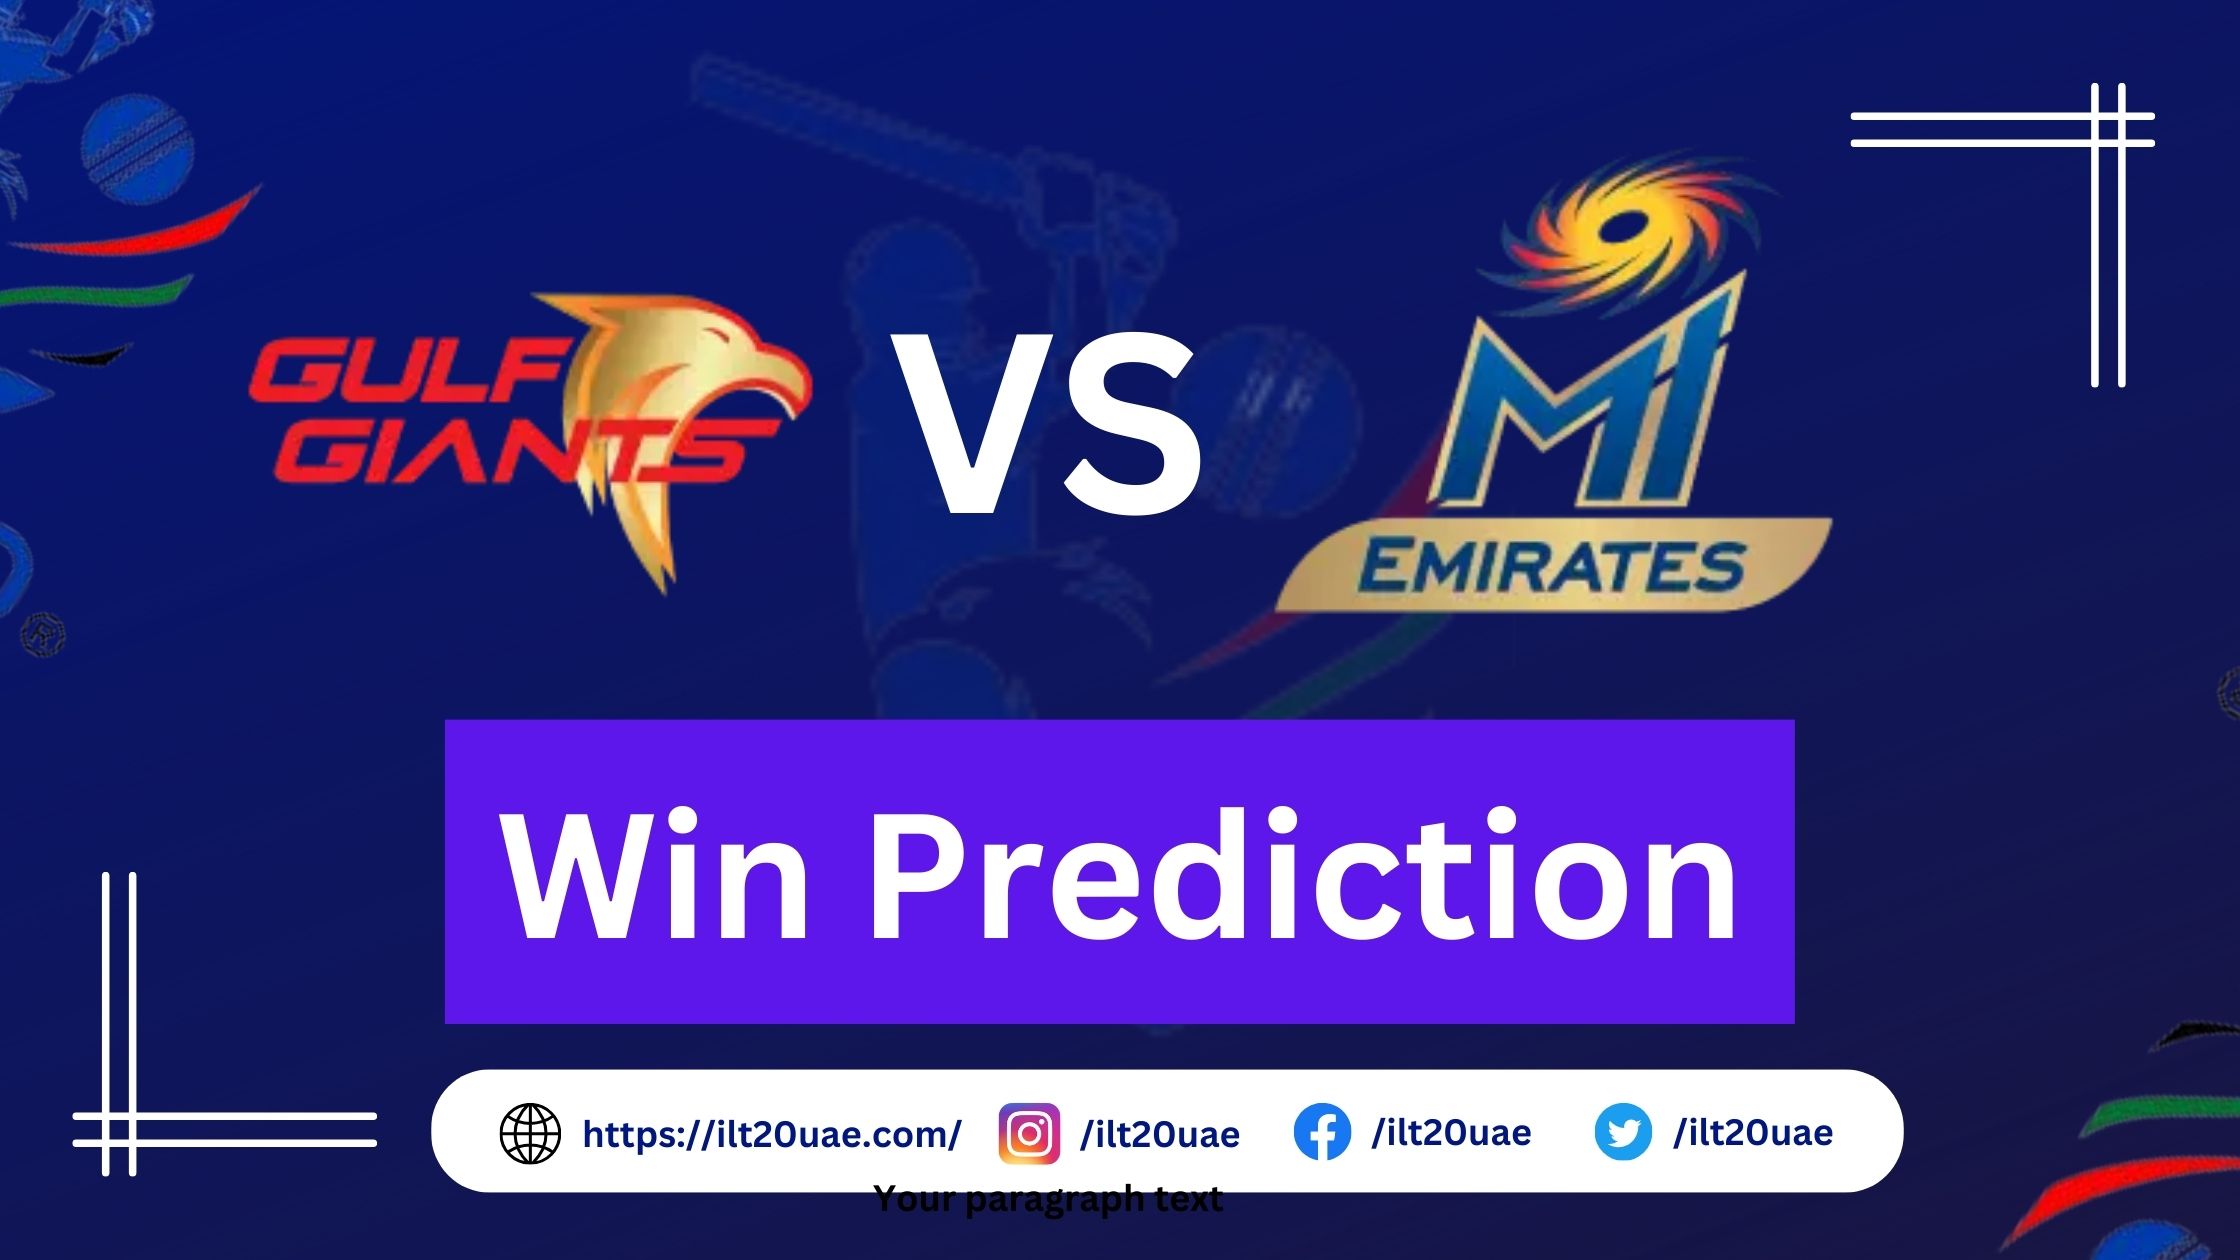 MI Emirates vs Gulf Giants Win Prediction